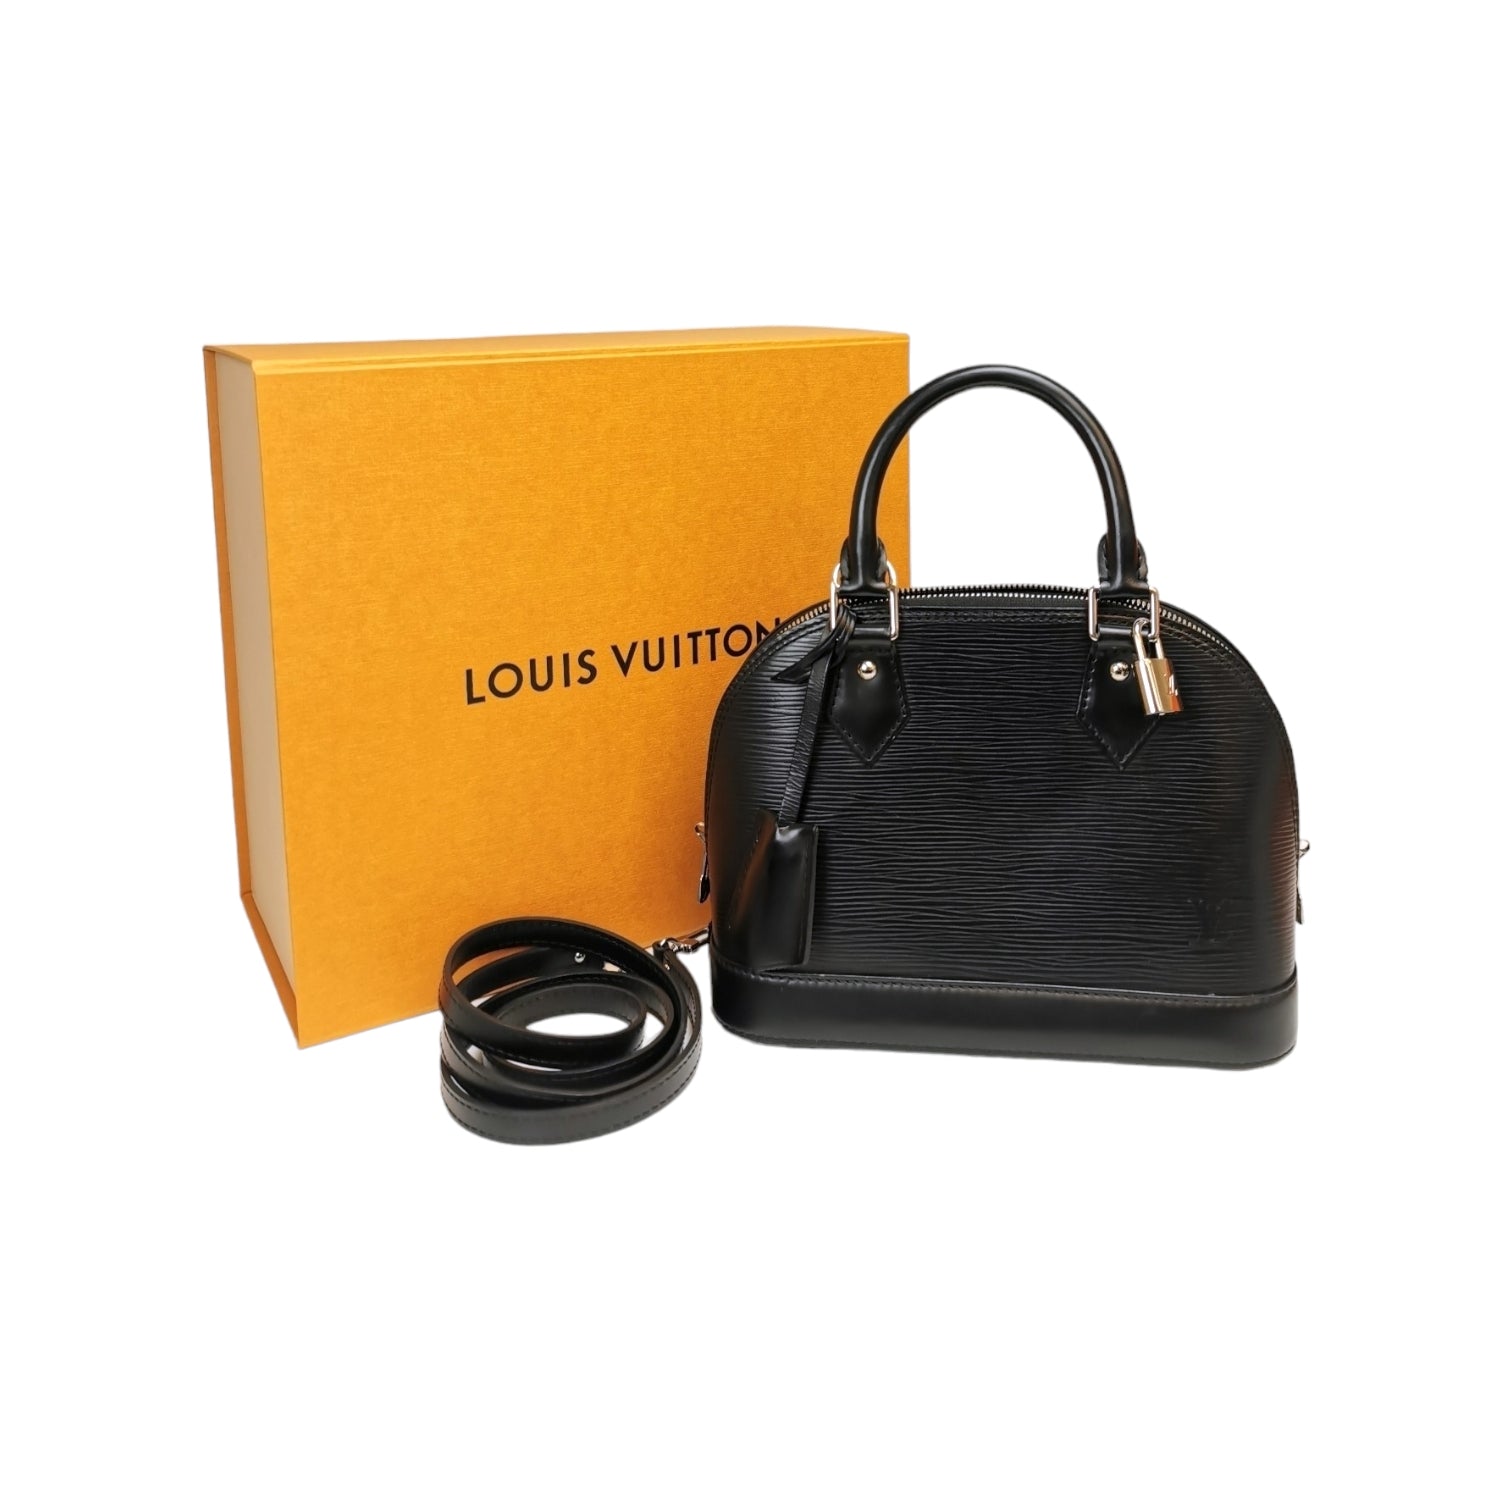 Louis Vuitton ALMA PM -VS- ALMA BB Comparison #handbags #almabb #alma  #louisvuitton #damierebene 